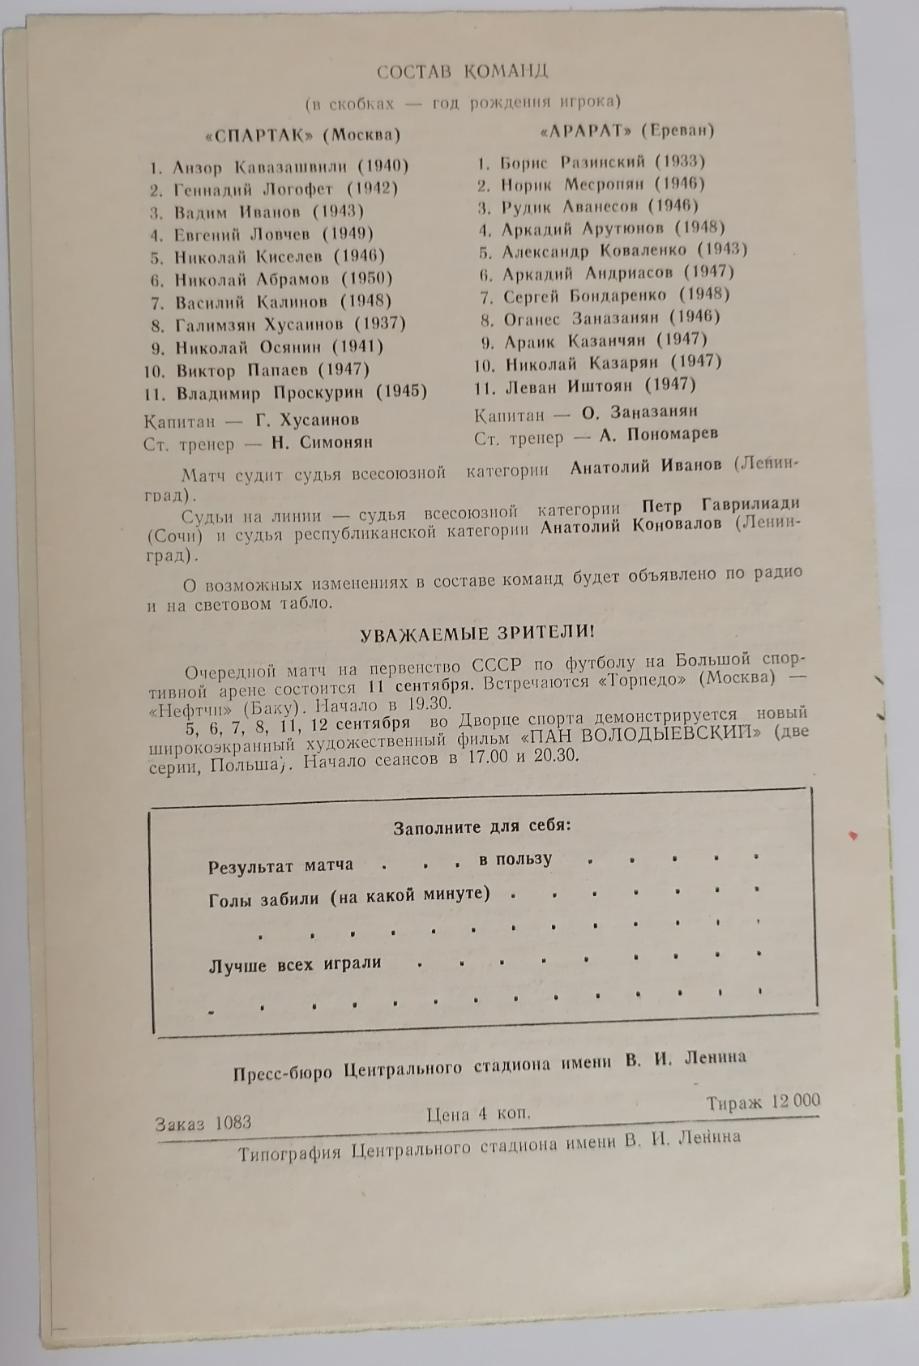 СПАРТАК МОСКВА - АРАРАТ ЕРЕВАН 1970 официальная программа 1